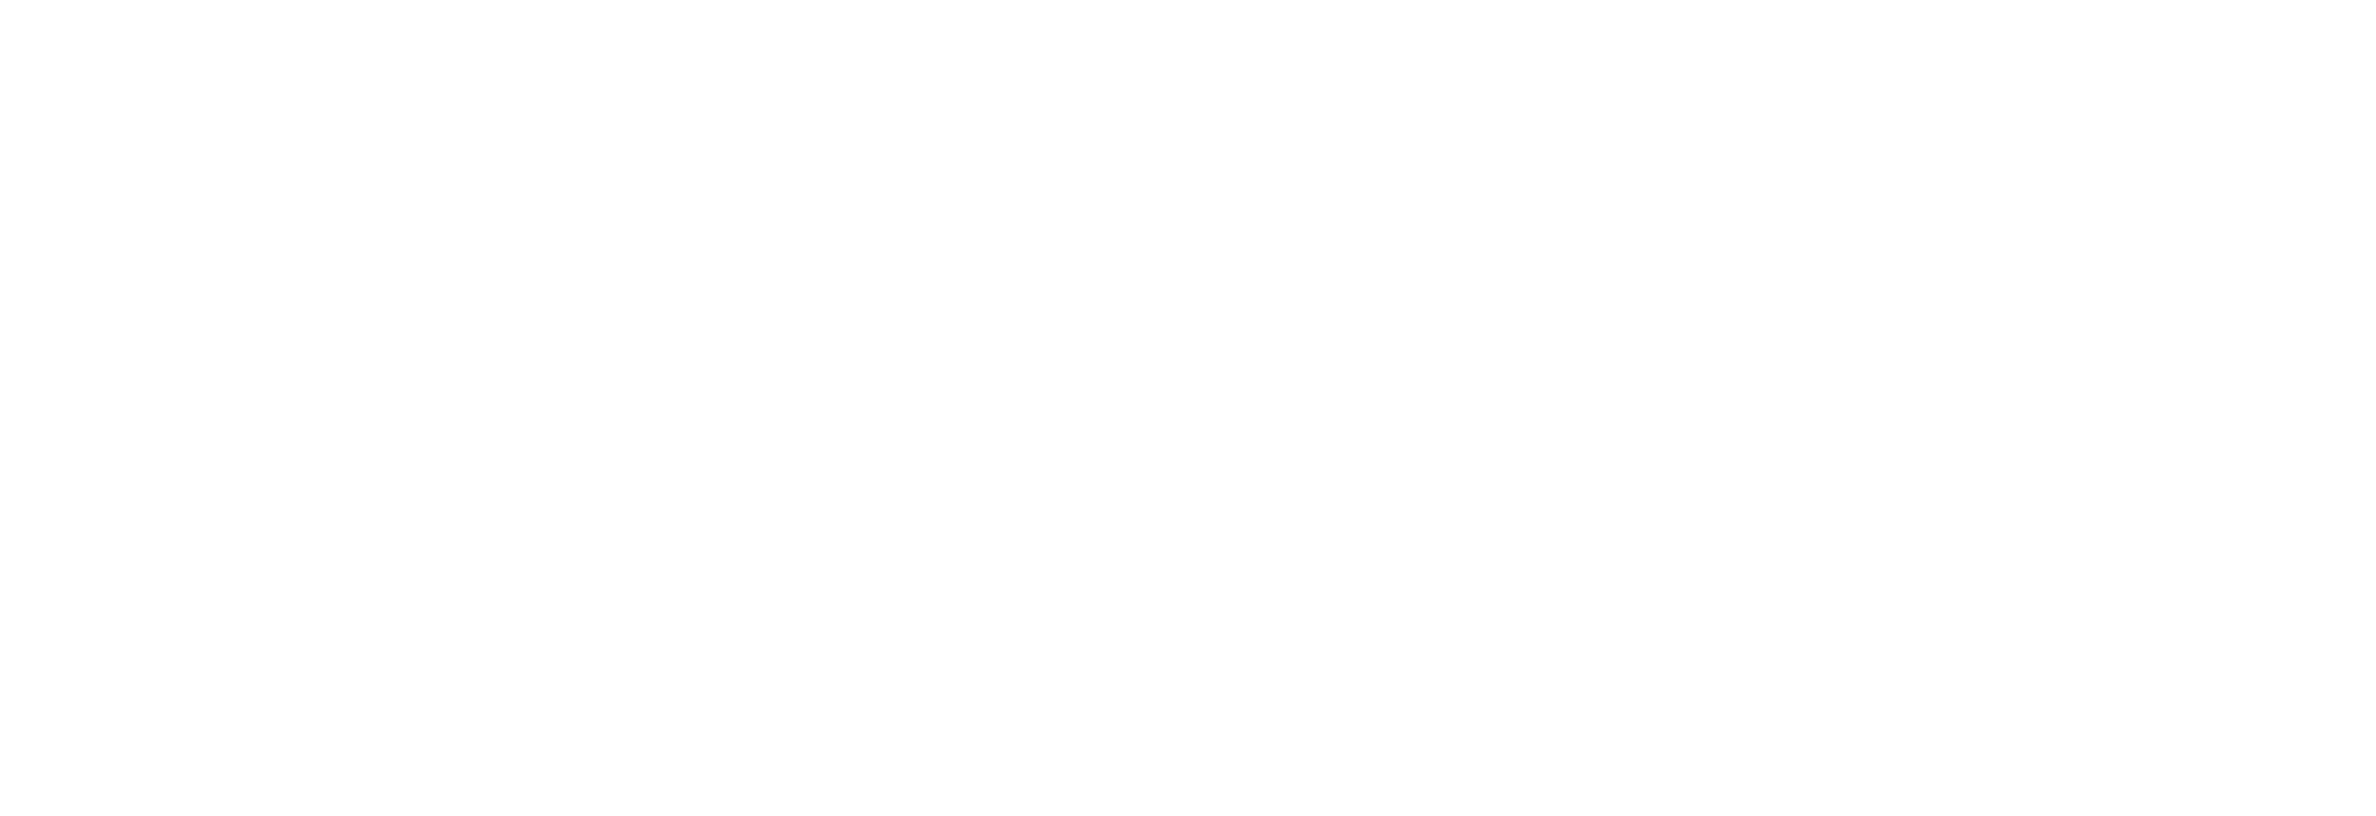 Kiilto Pro Academy